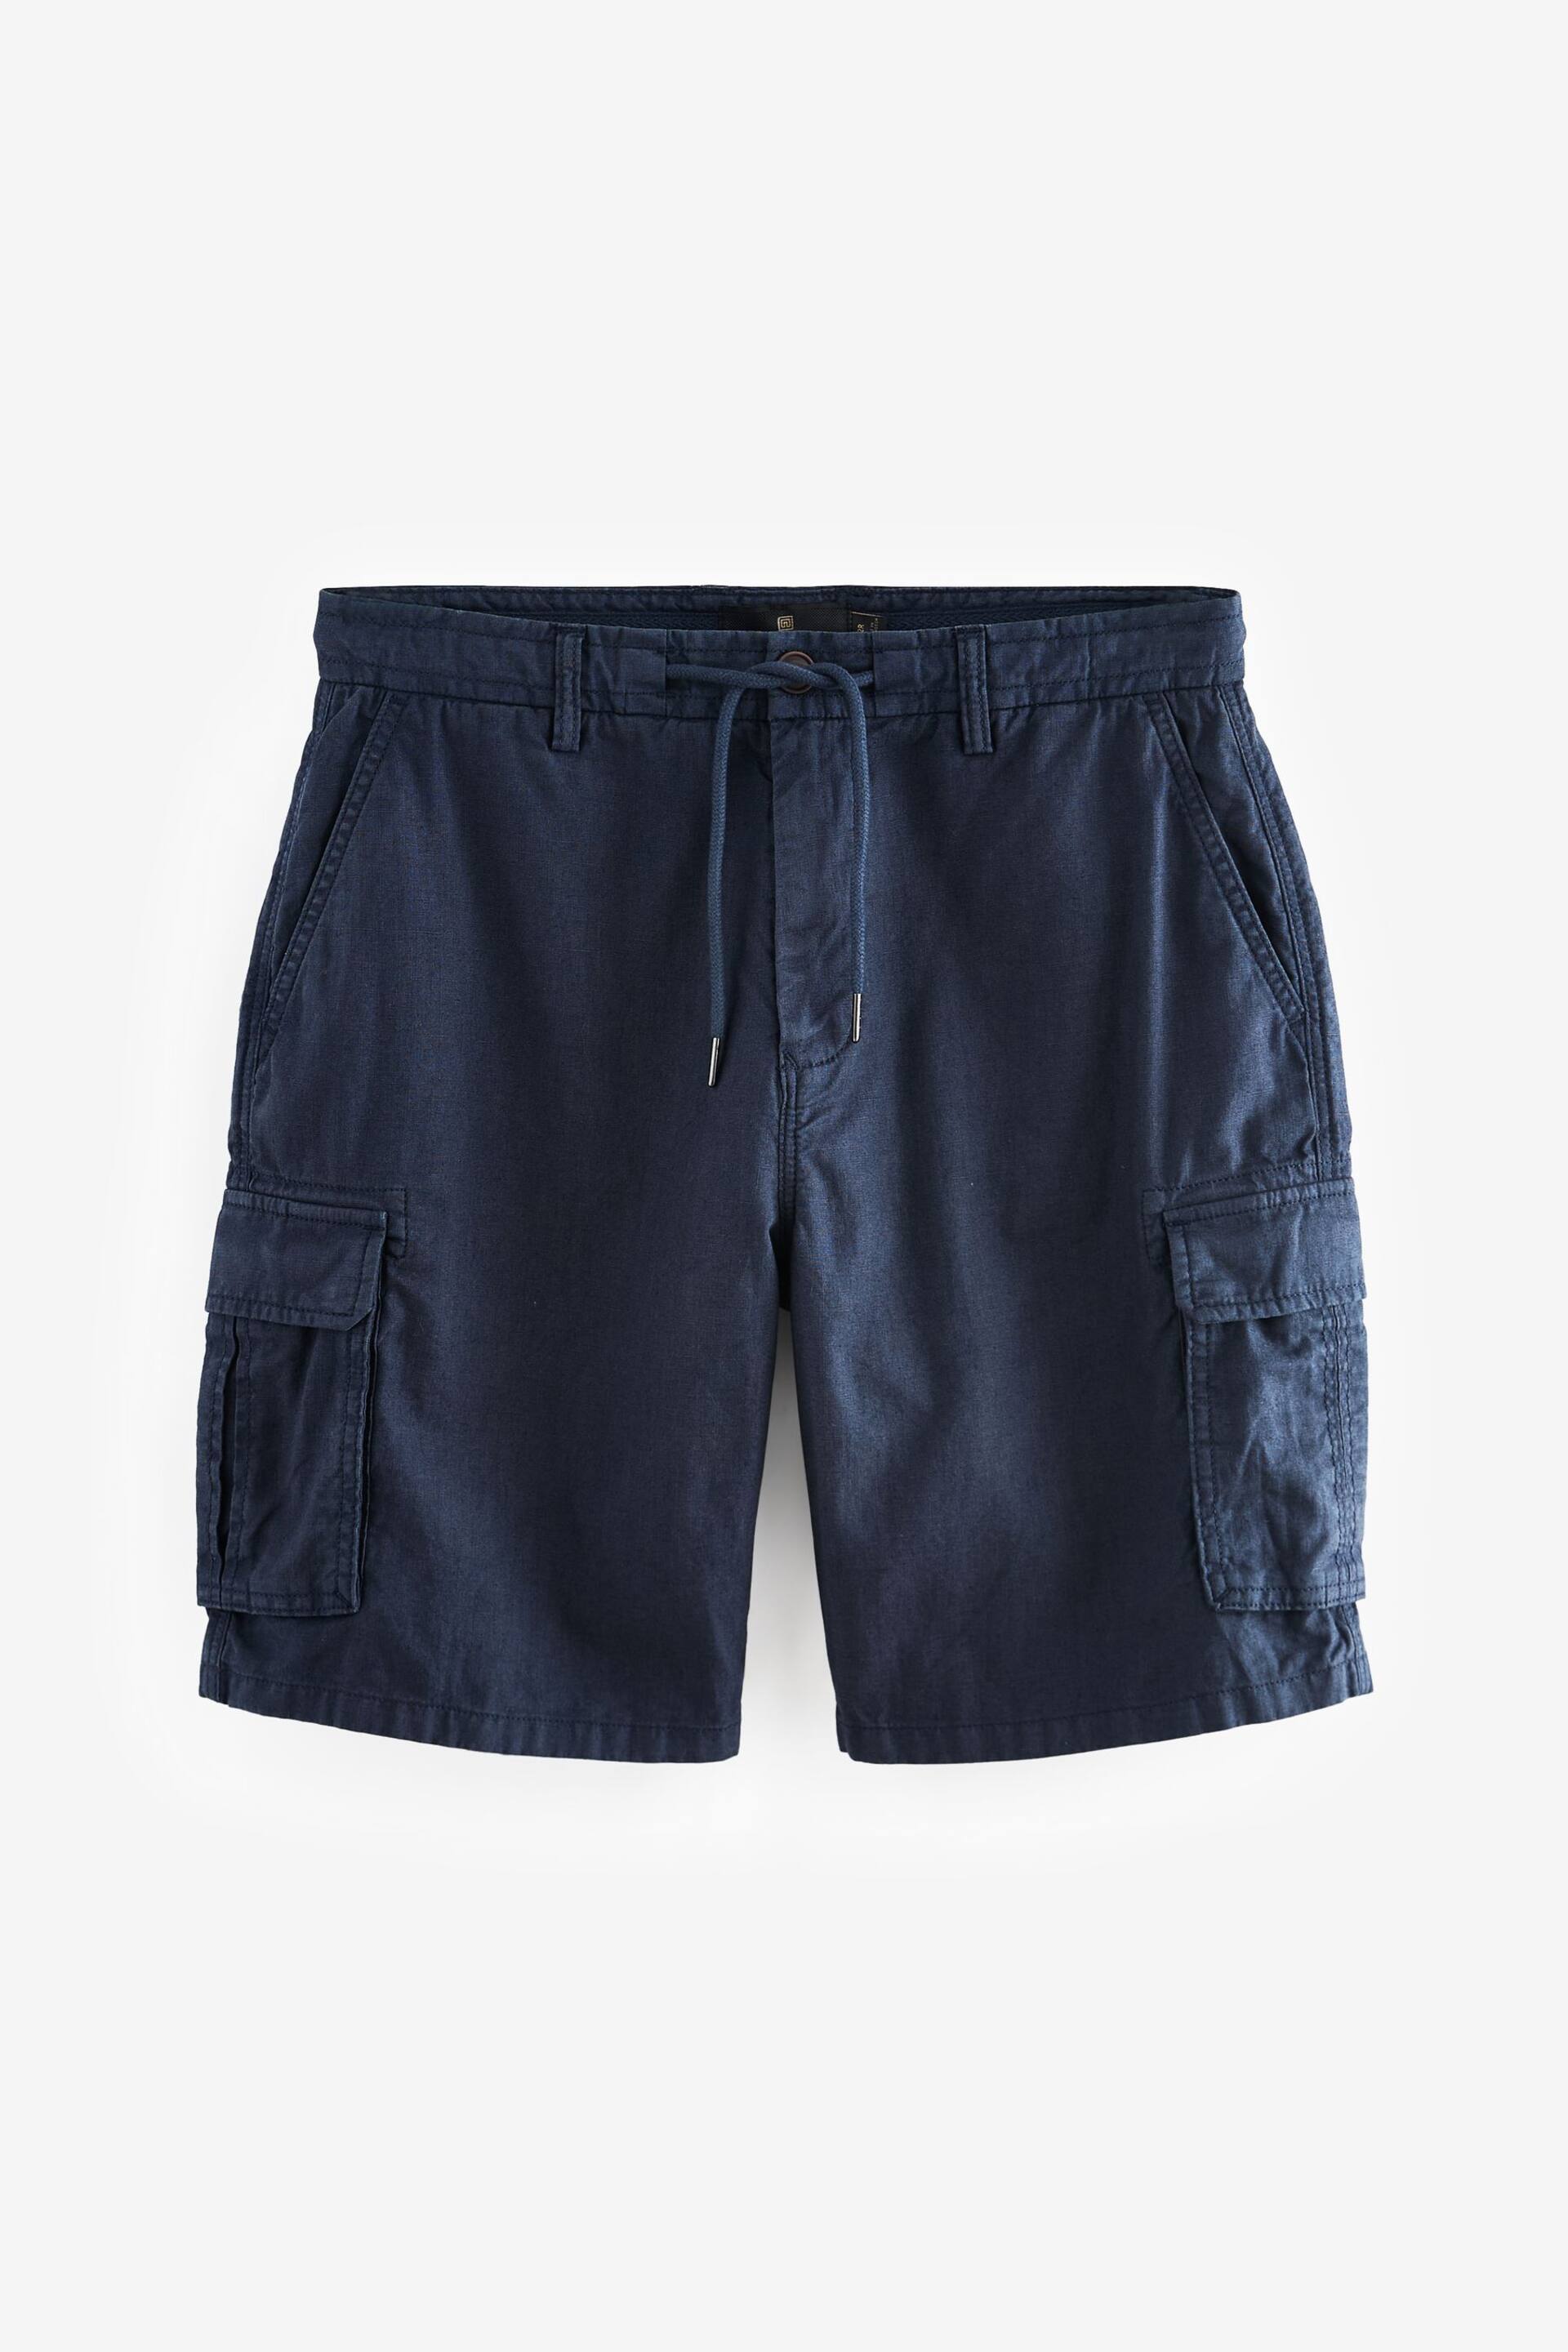 Navy Cotton Linen Cargo Shorts - Image 7 of 9